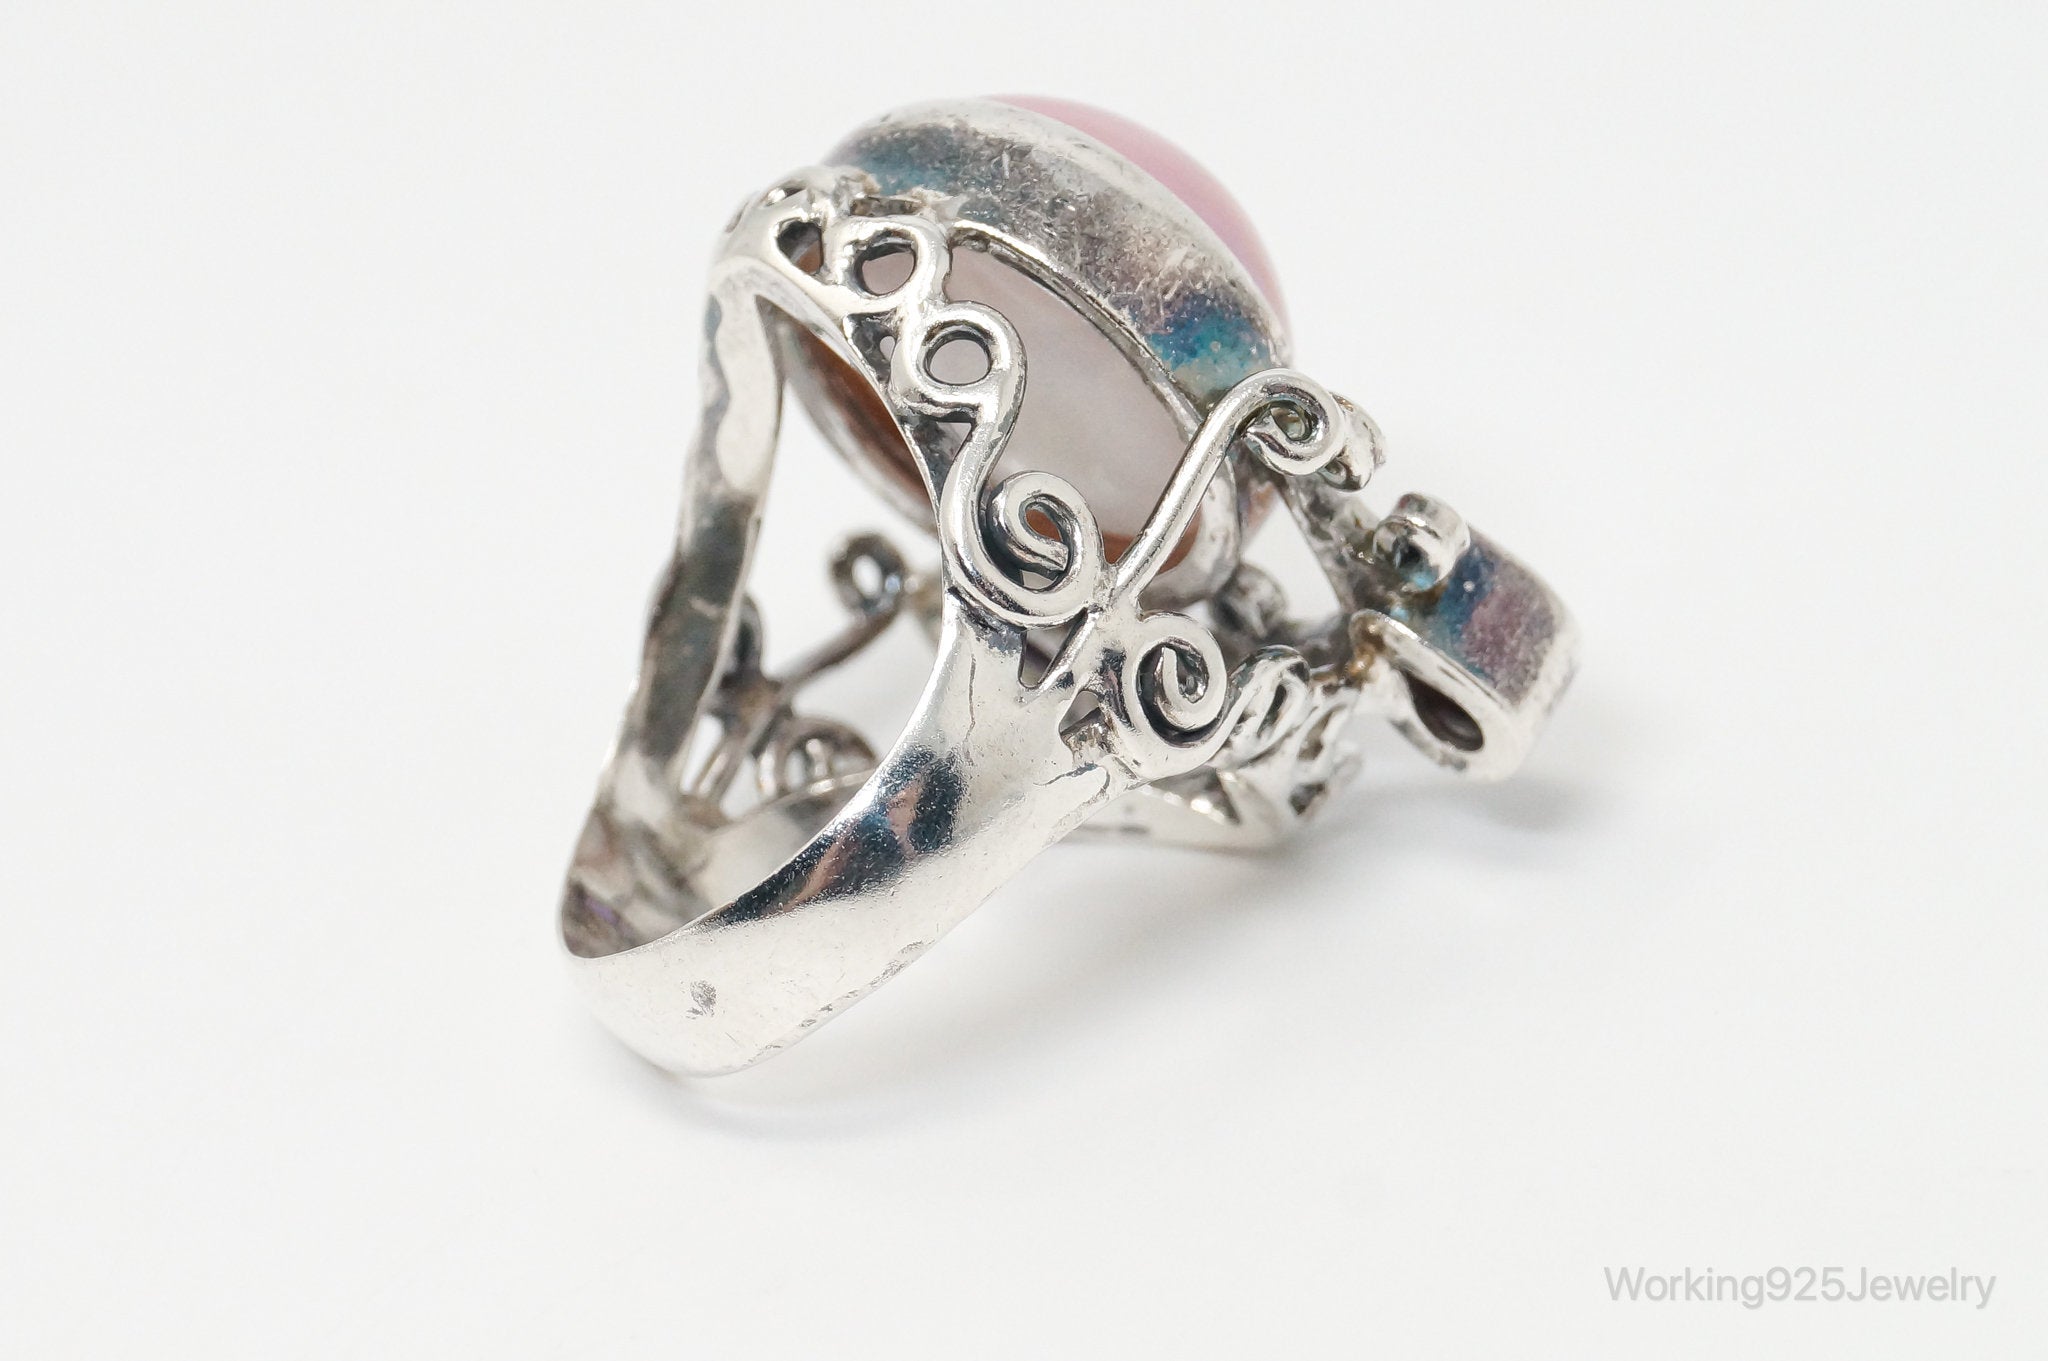 Designer BC Pink Pearl Amethyst Garnet Sterling Silver Statement Ring SZ 6.25